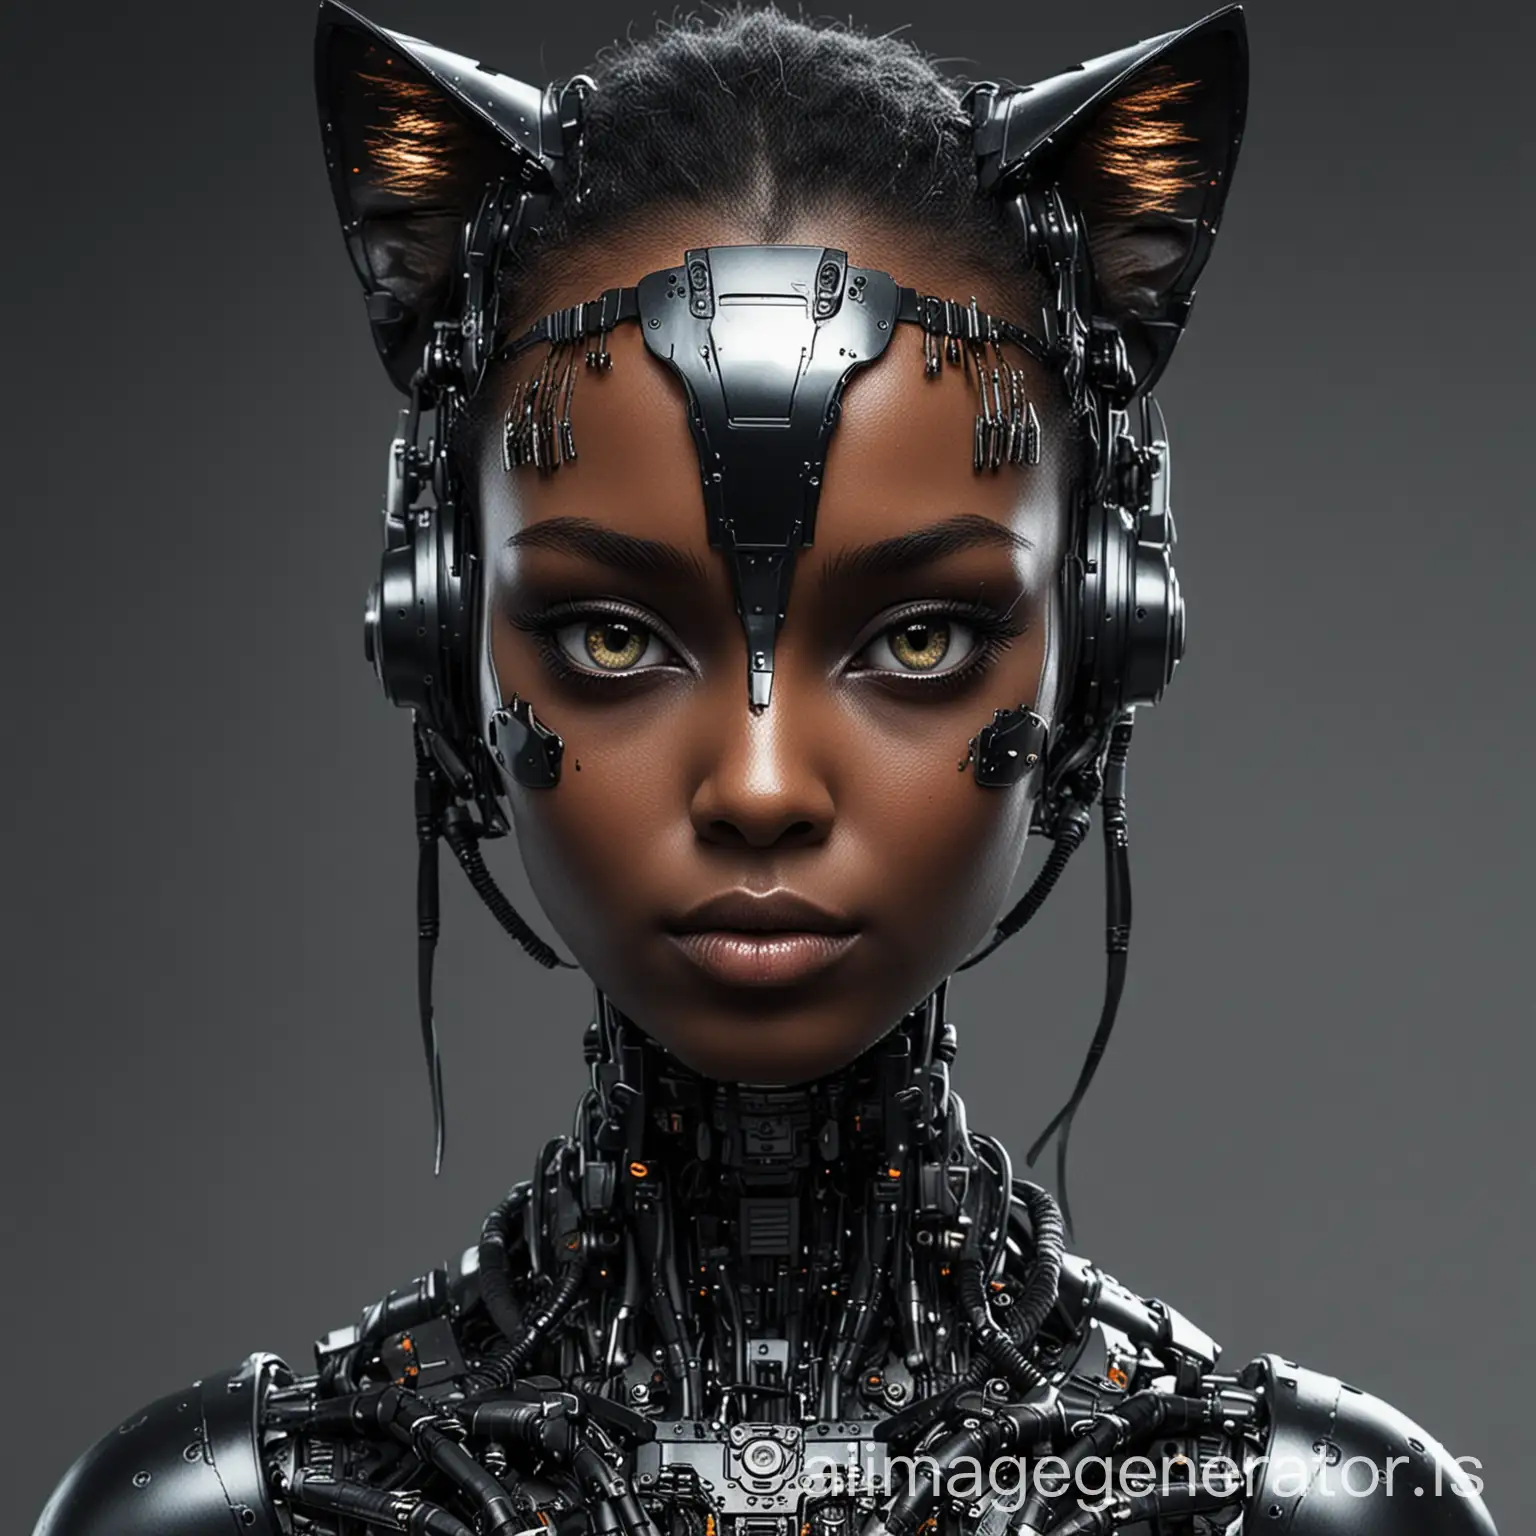 Black robot women with cat eyes